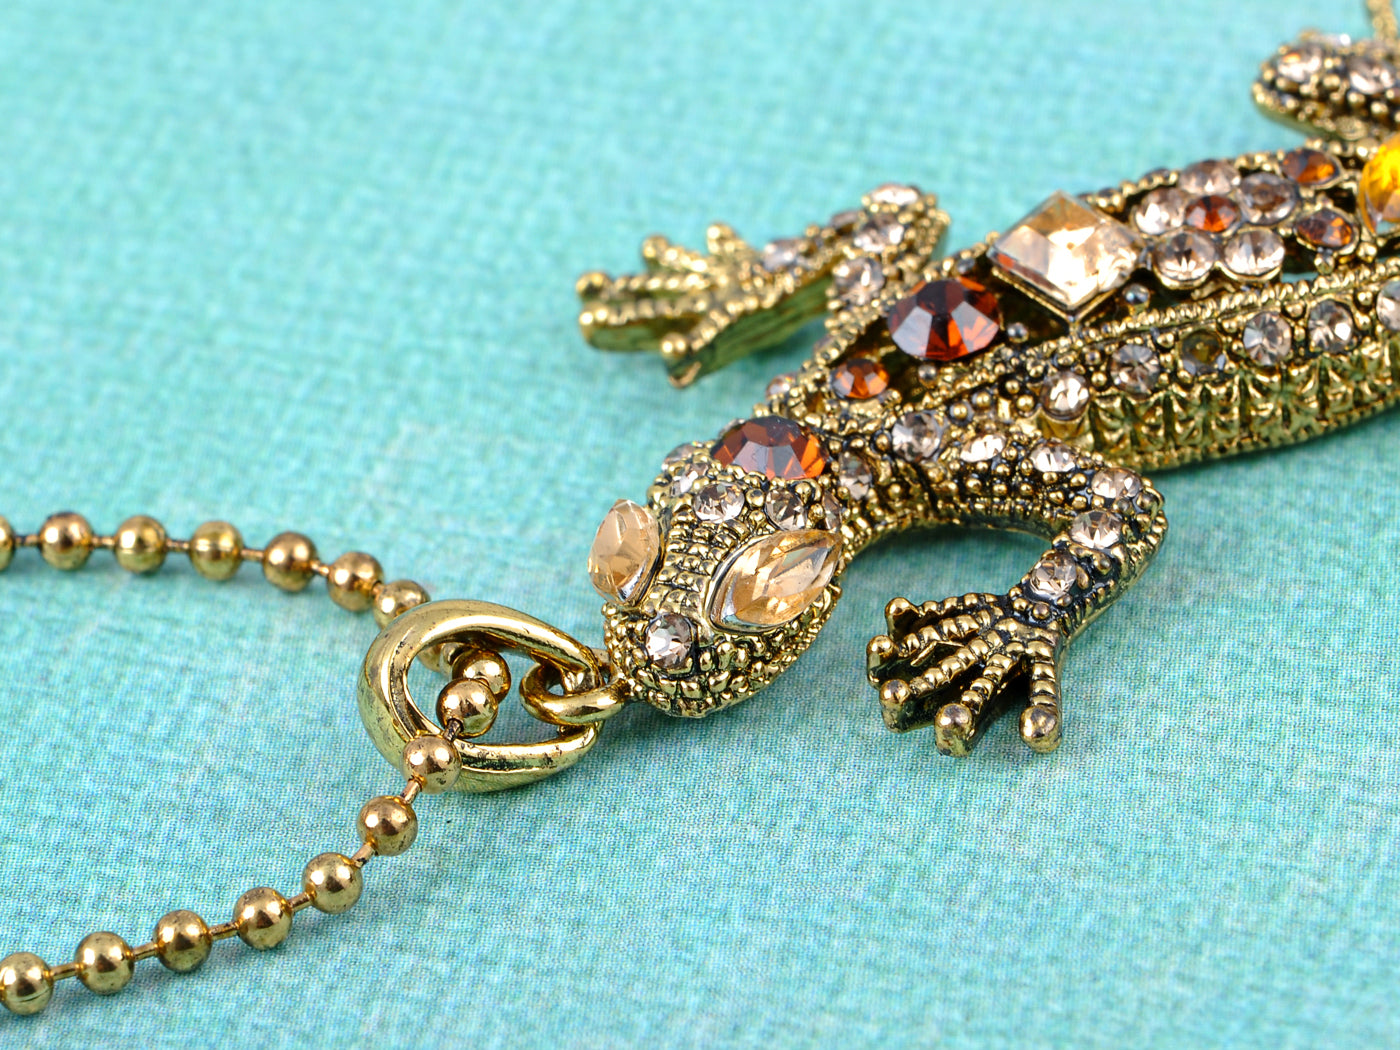 Green Resin Bead Body Water Gecko Lizard Pendant Necklace